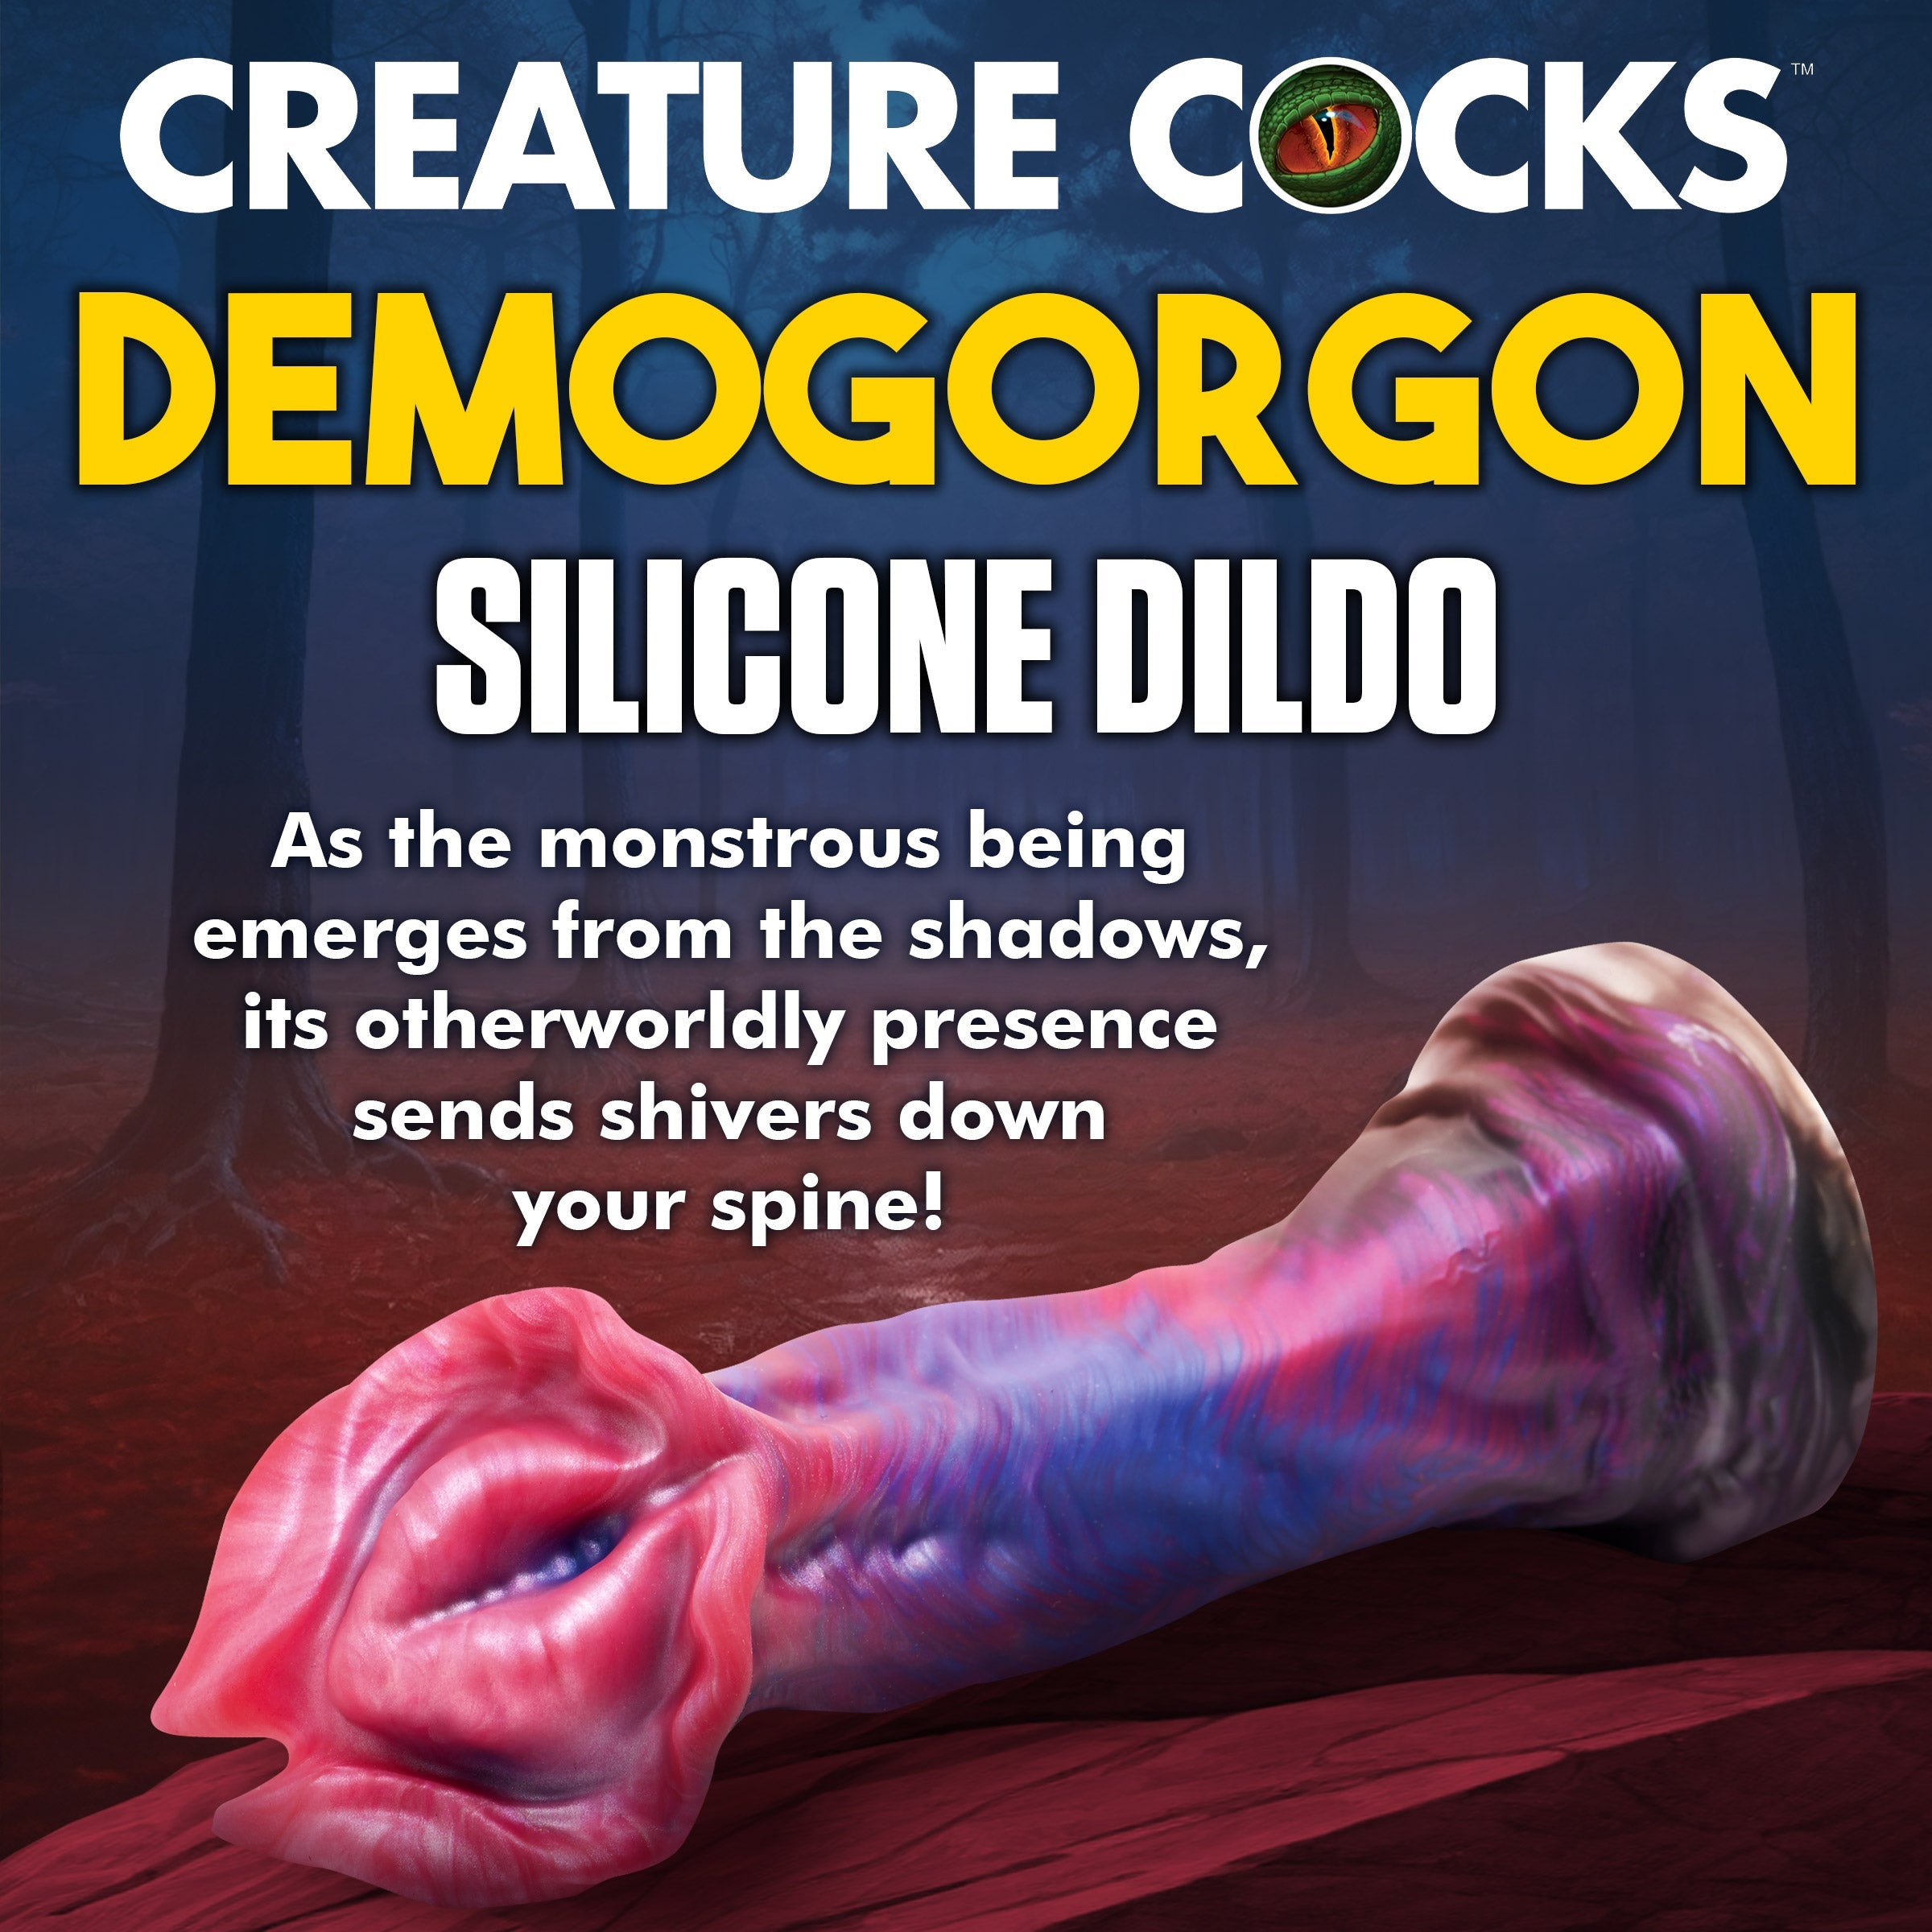 Demogorgon Silicone Dildo